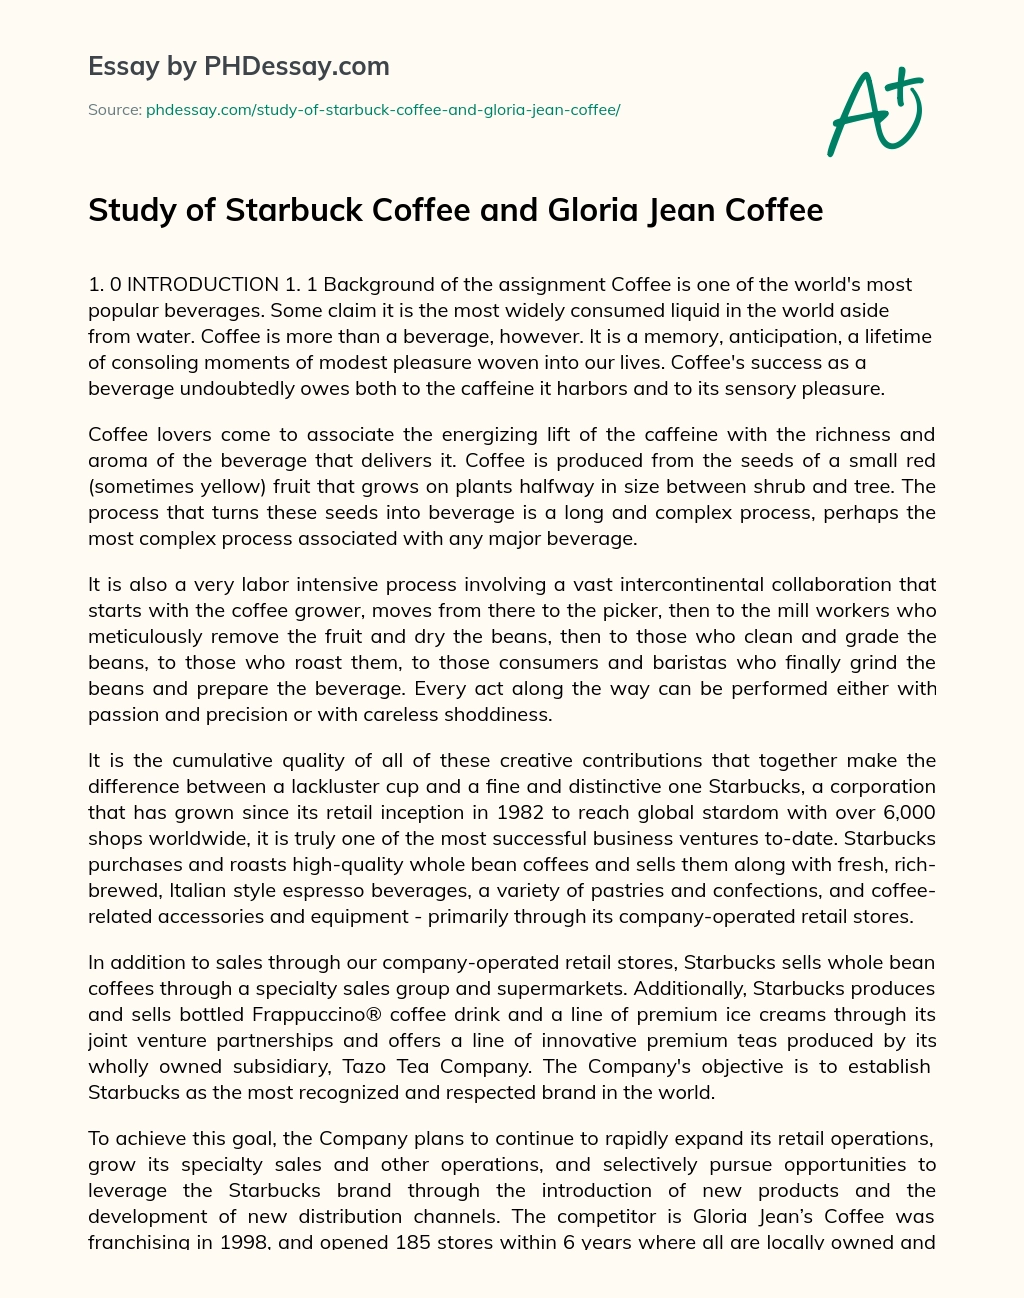 Study of Starbuck Coffee and Gloria Jean Coffee essay